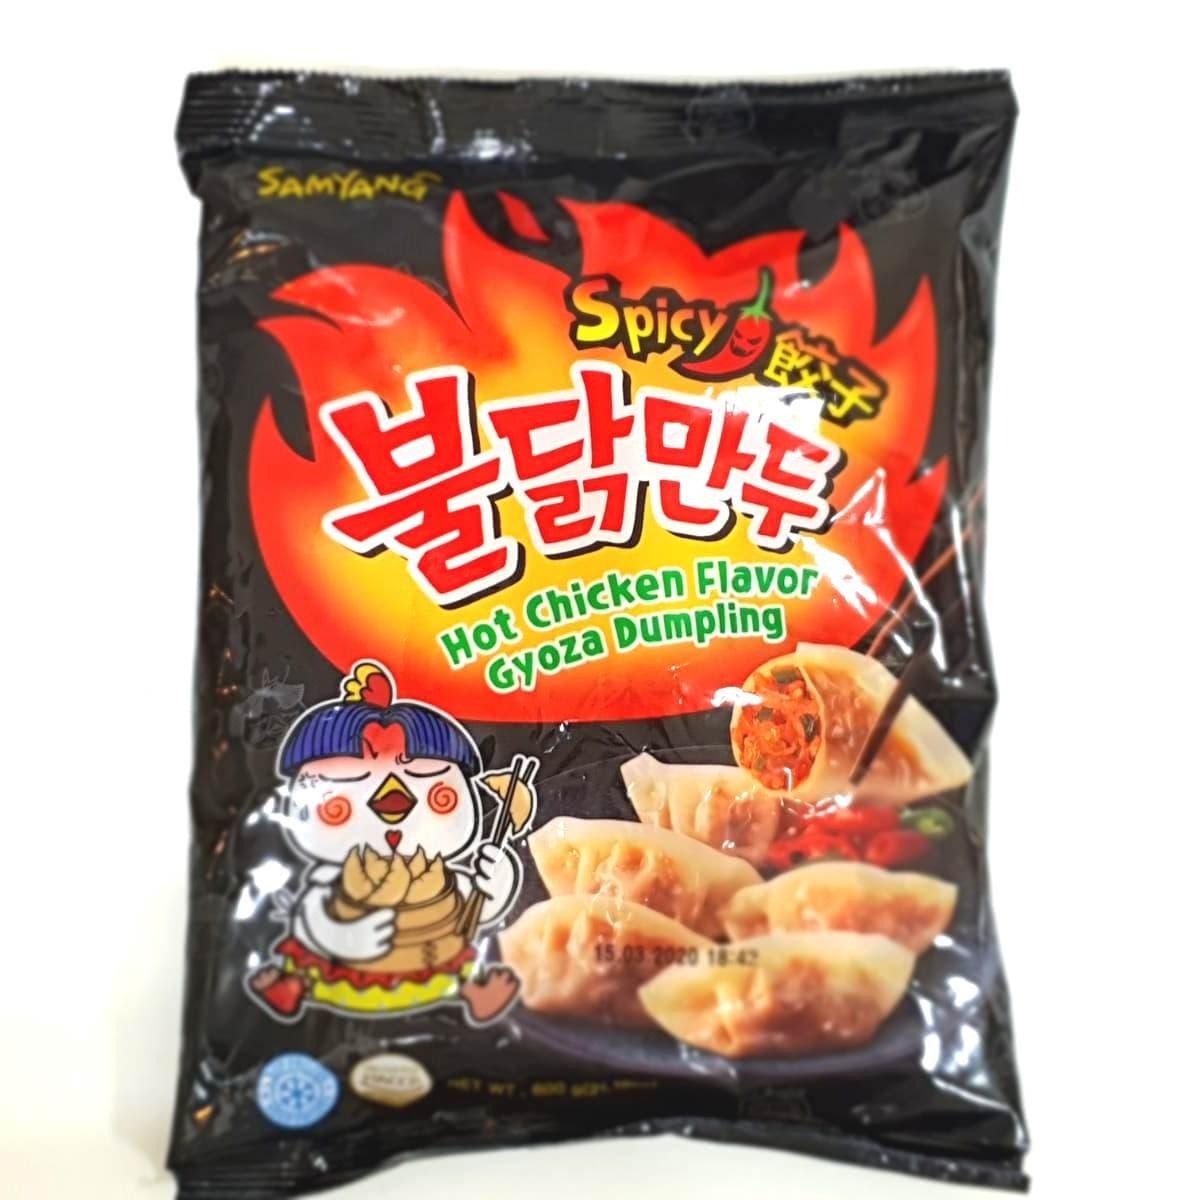 samyang-hot-chicken-flavor-gyoza-dumpling-spicy